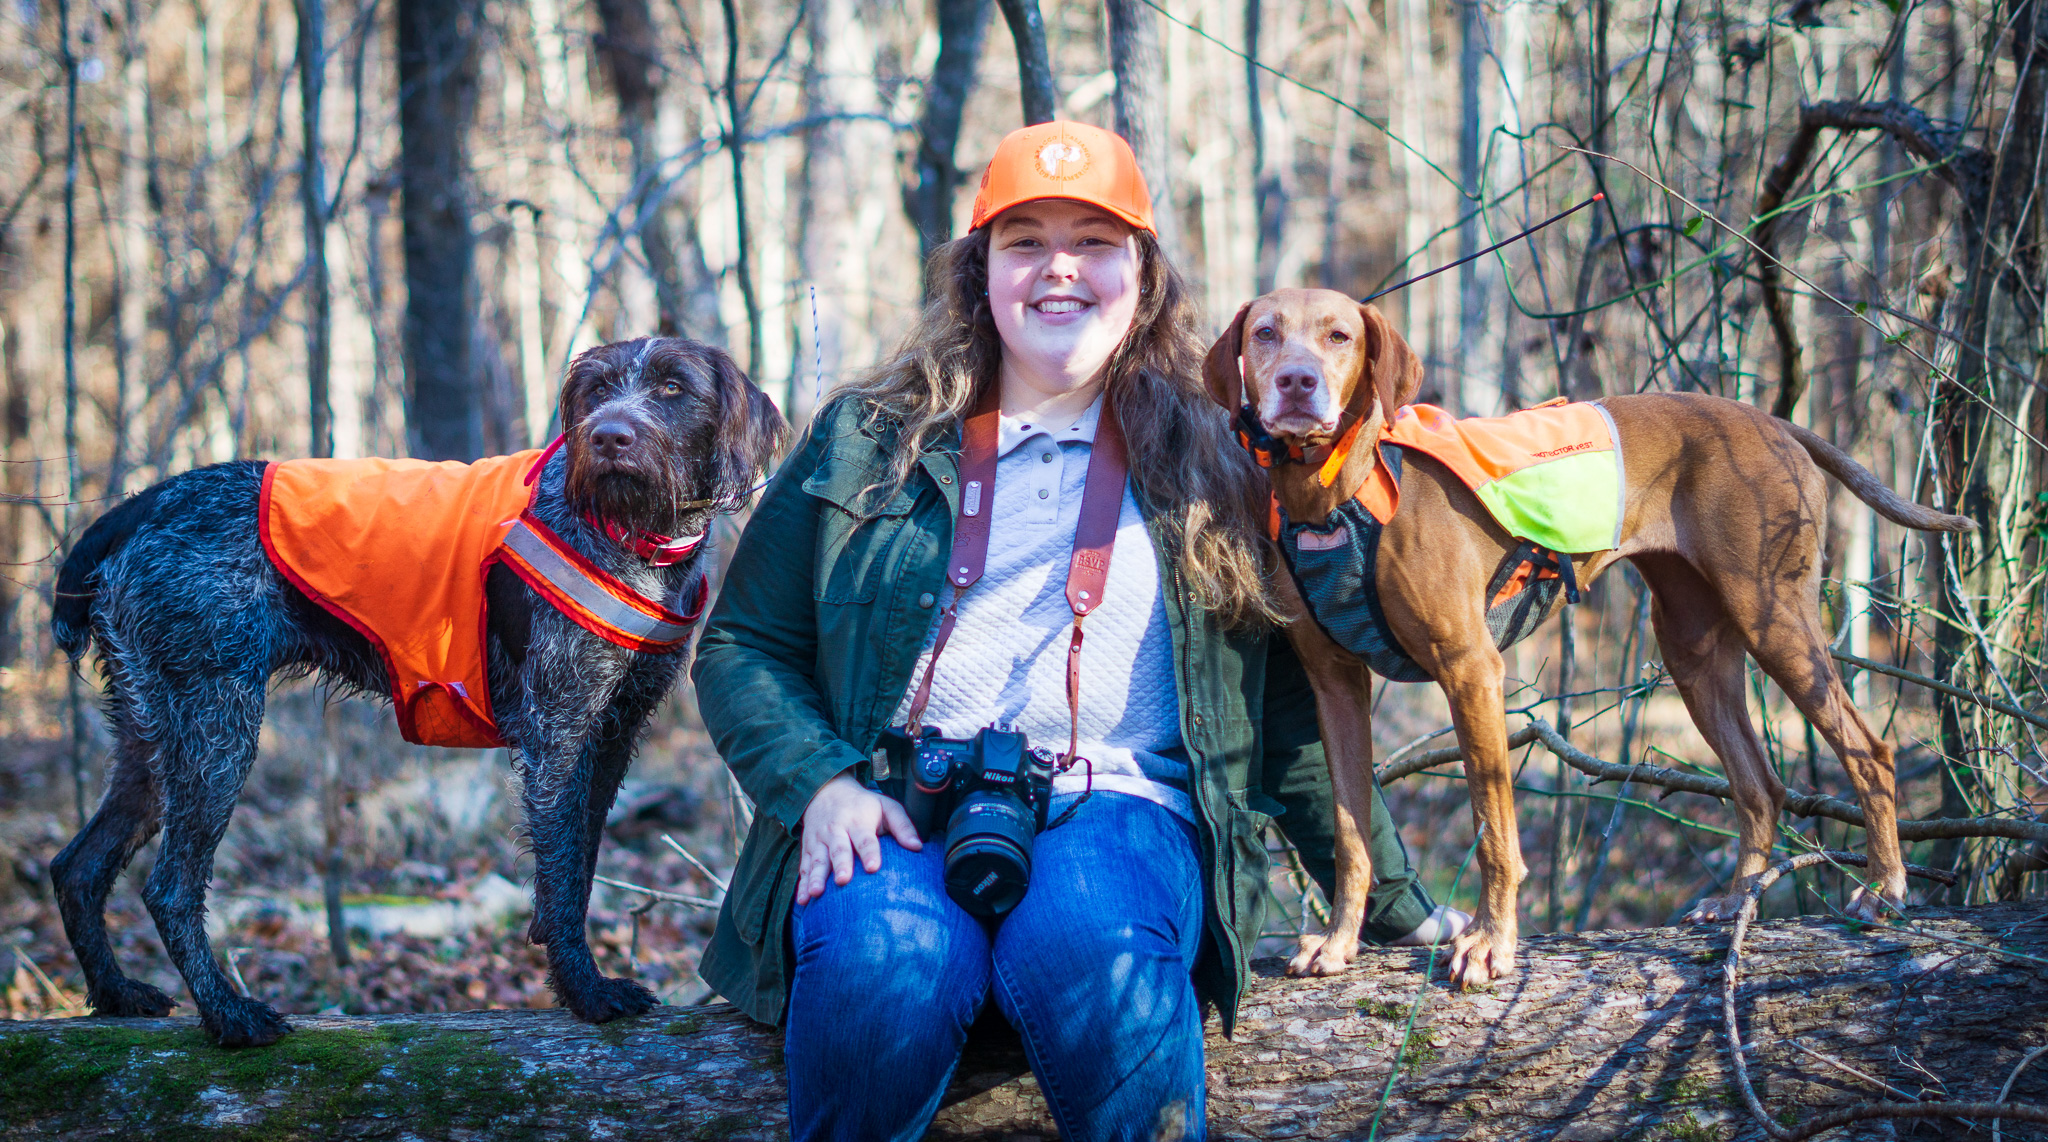 Kallie and Zara wear protective hunting vests